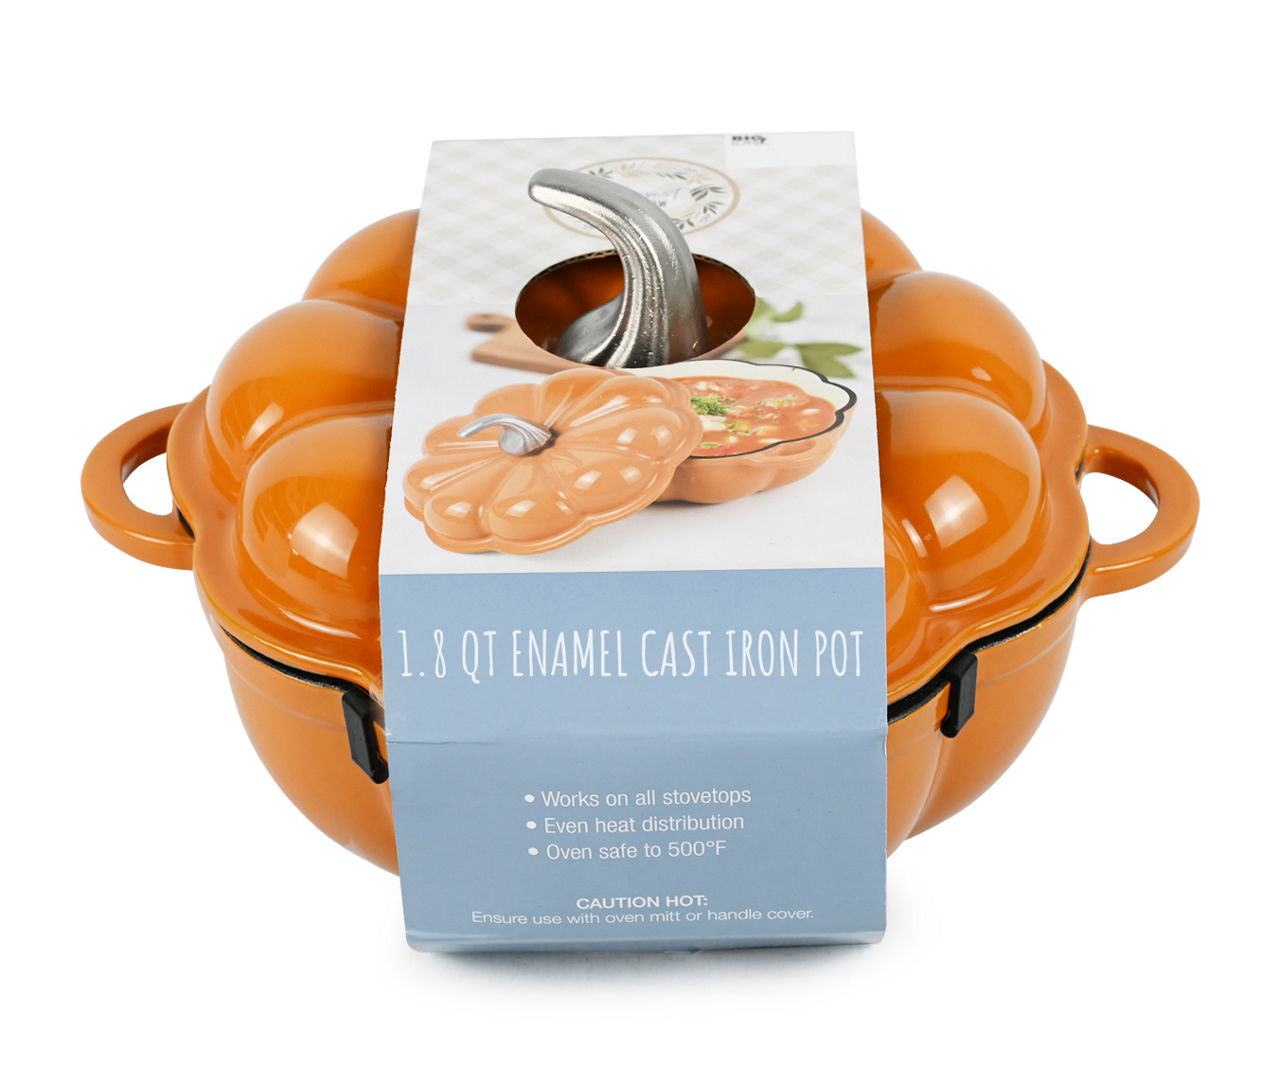 WISELADY Enameled Cast Iron Dutch Oven Bread Baking Pot with Lid 4QT Orange